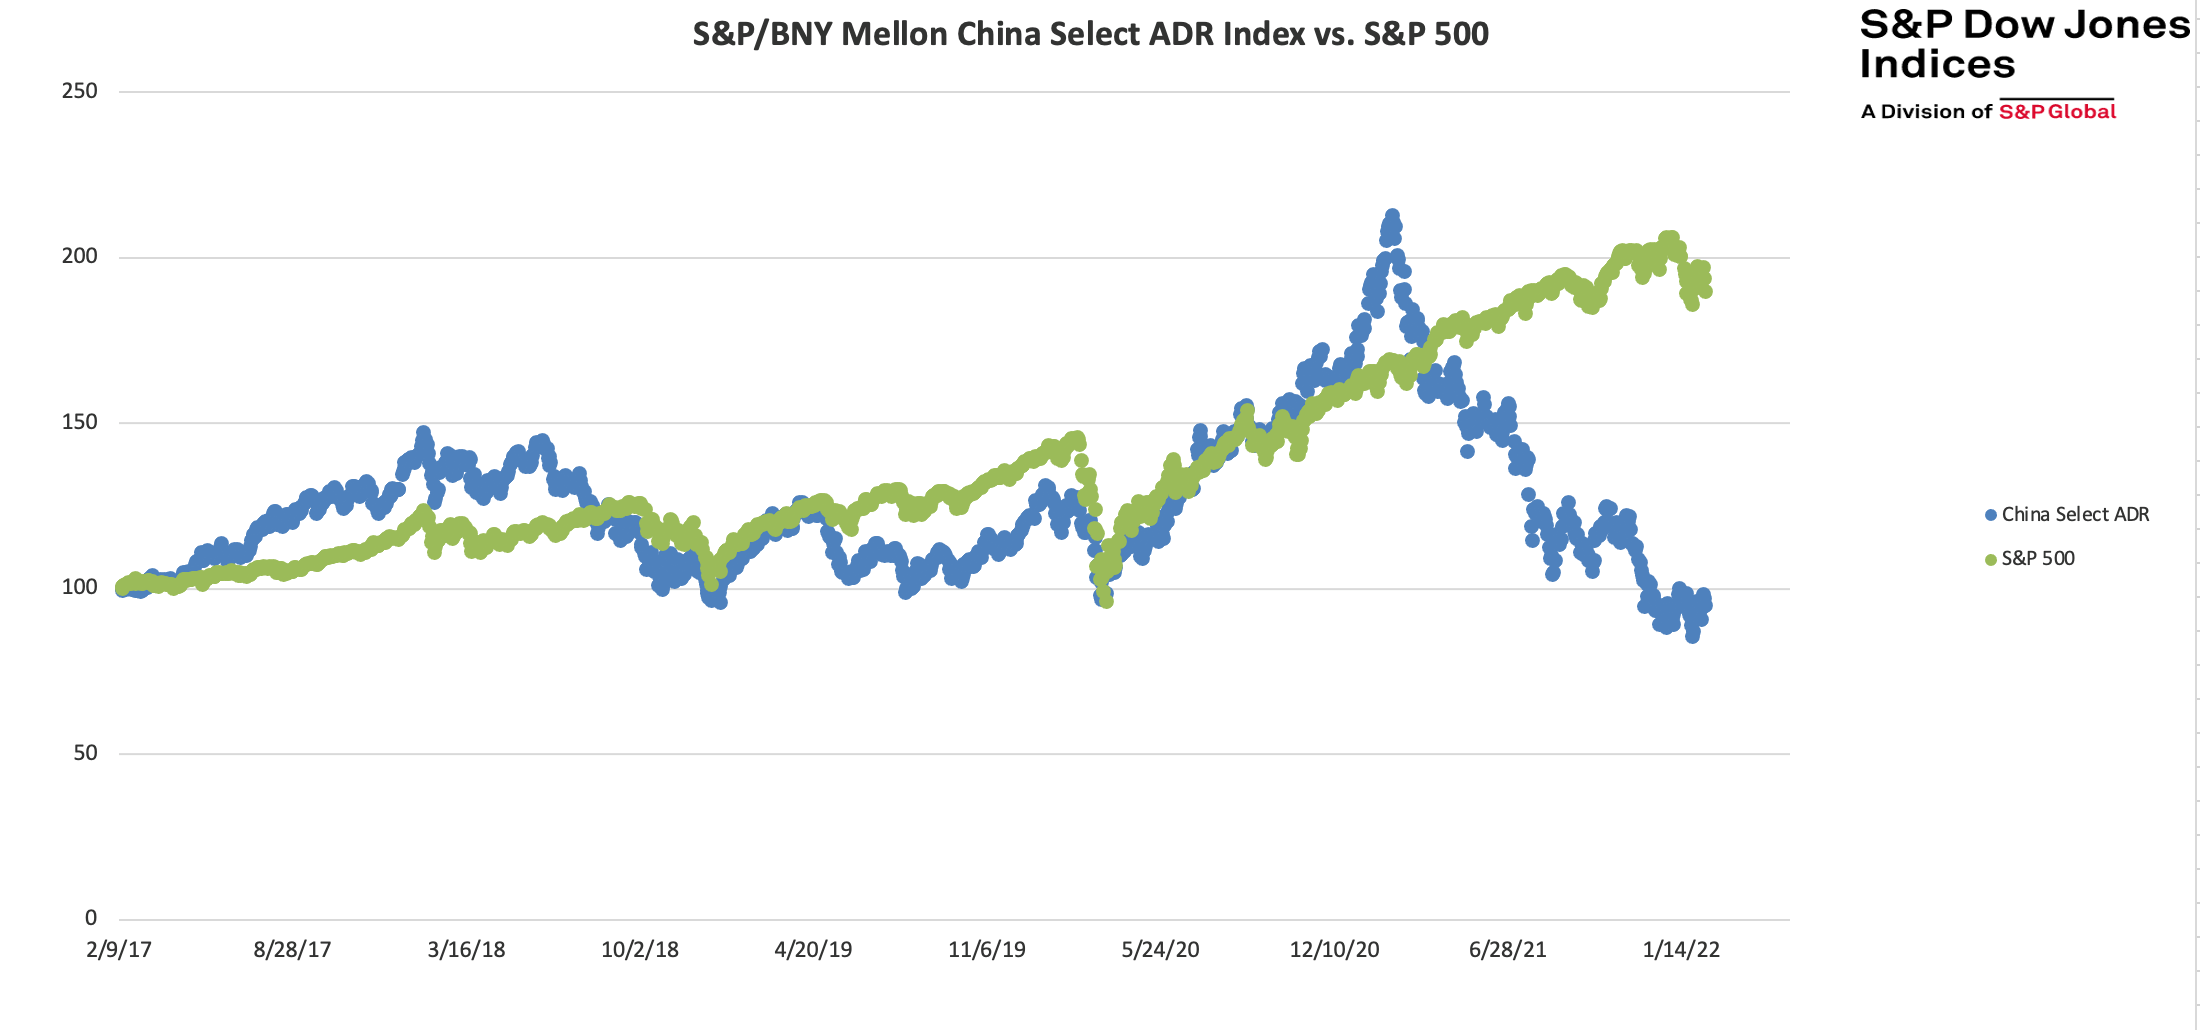 S&P/BNY Mellon China Select ADR Index vs S&P 500